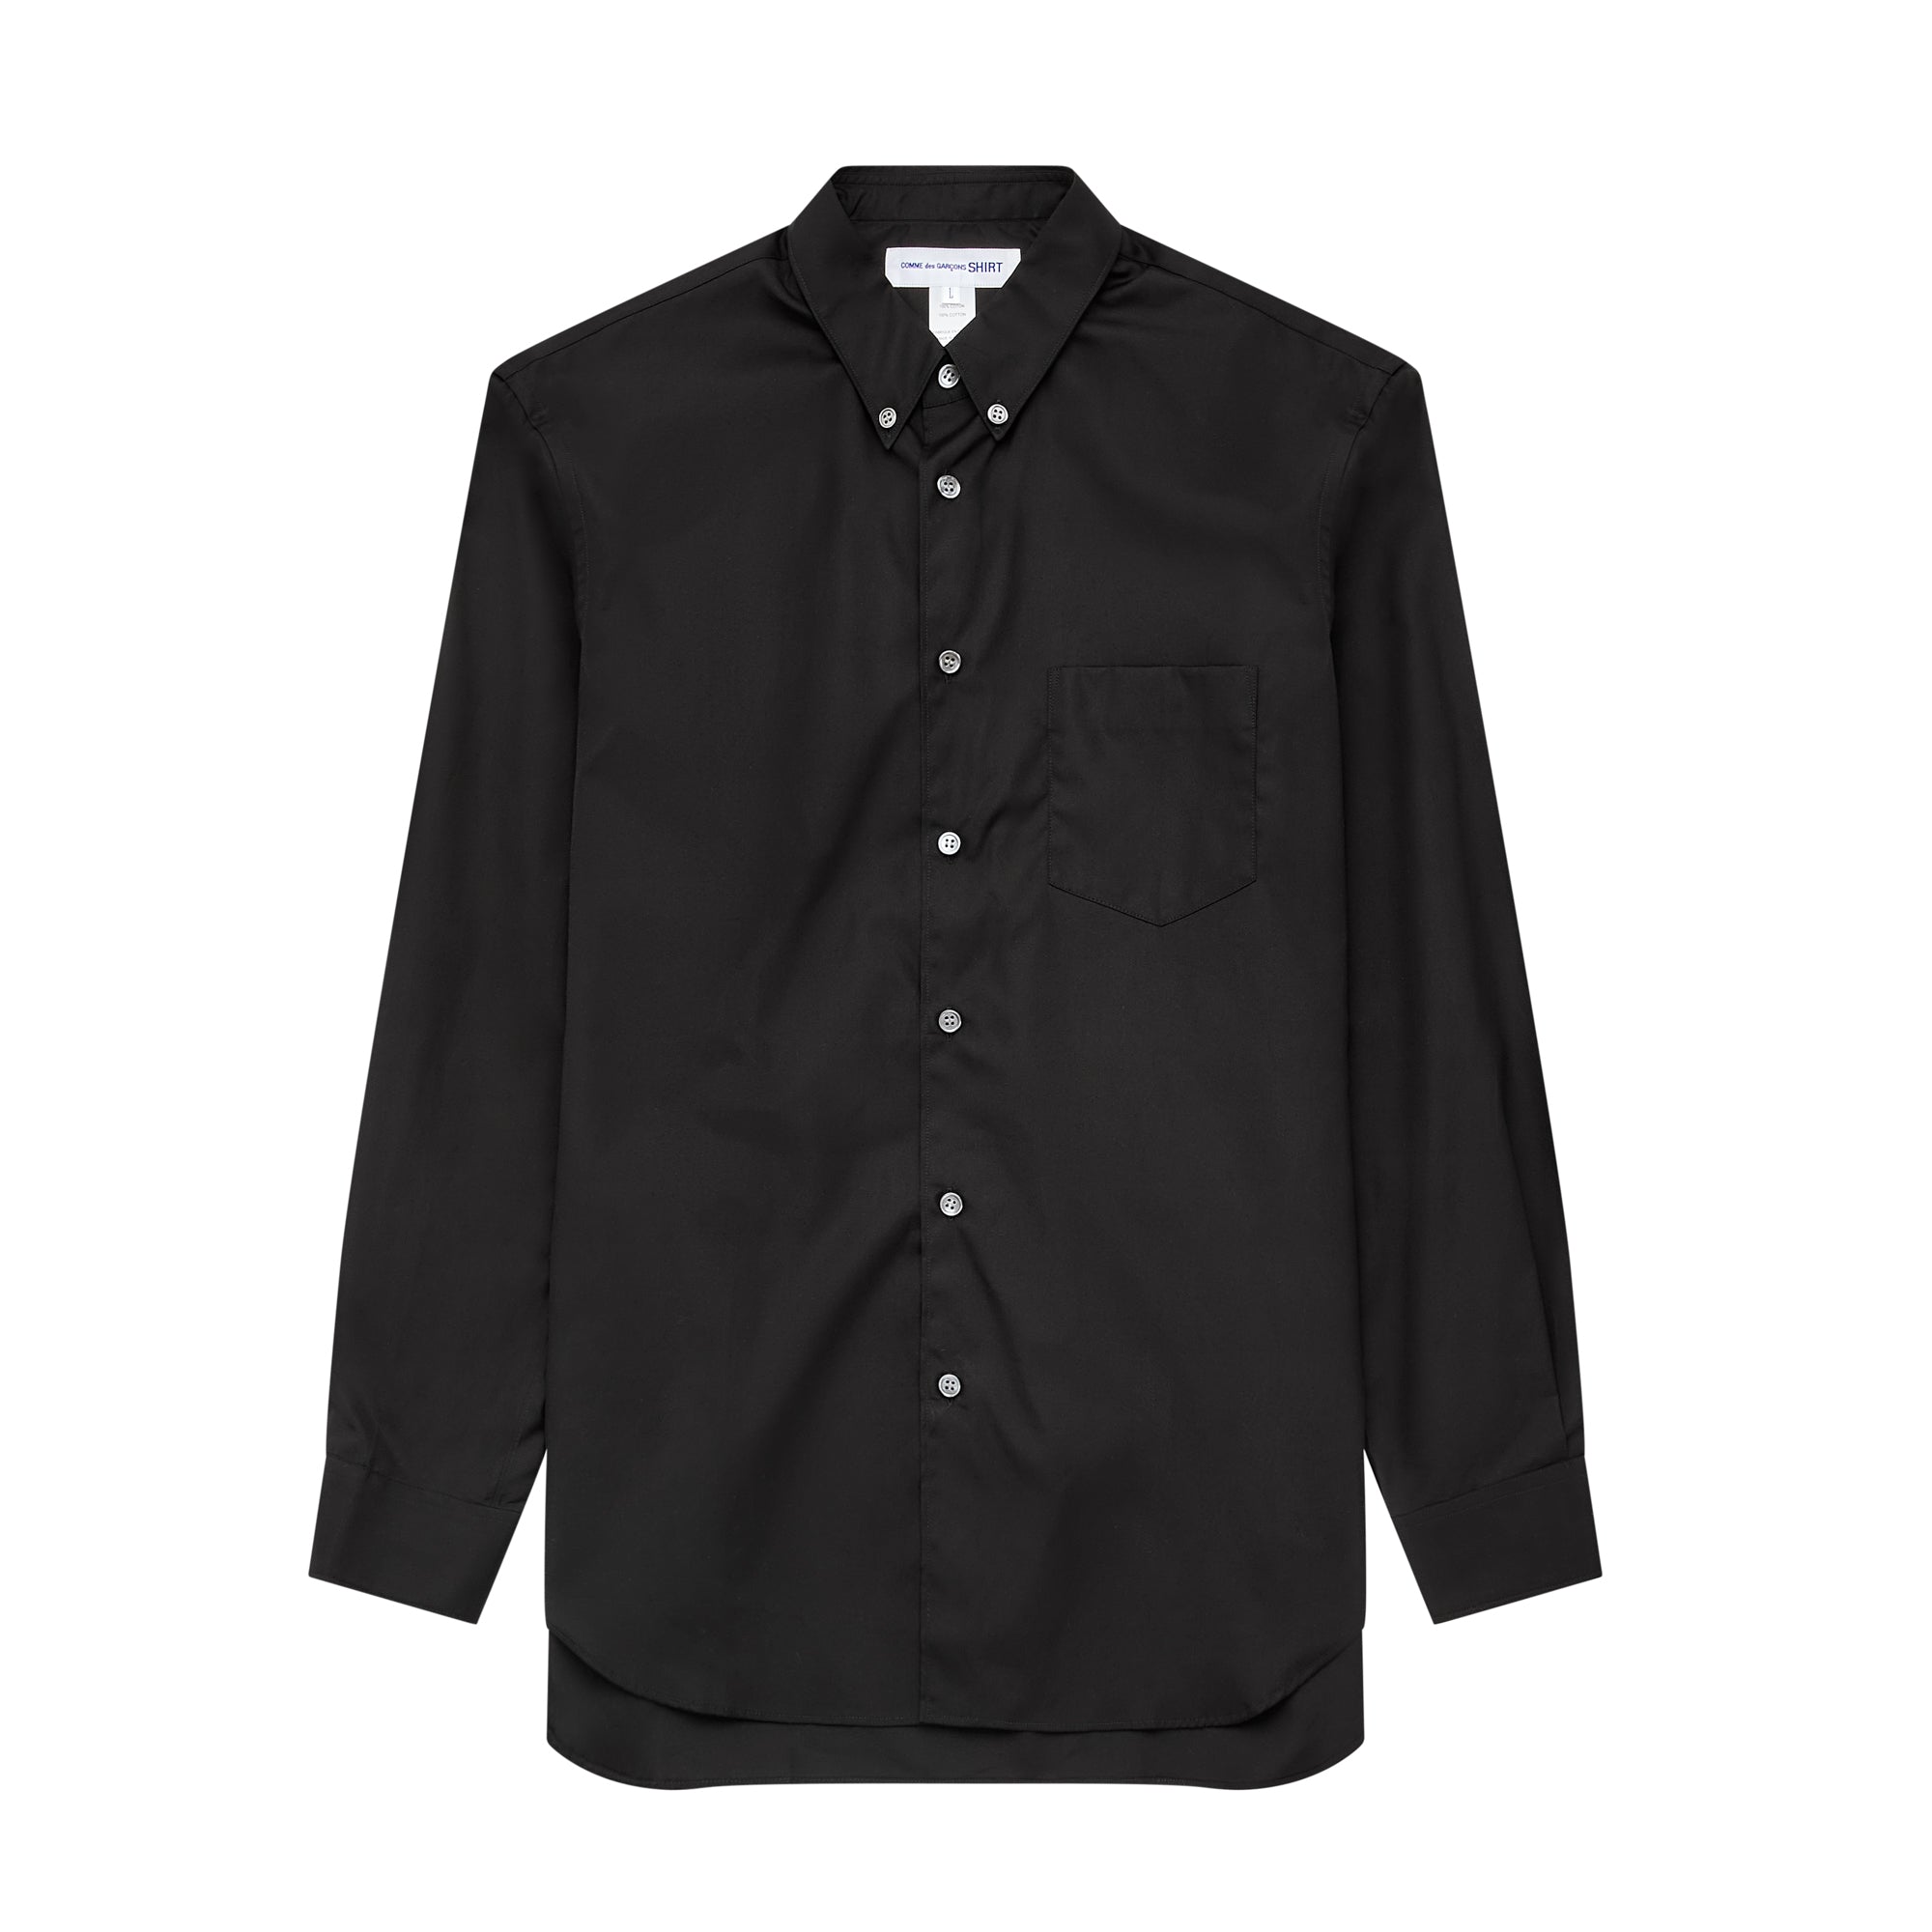 CDG Shirt Forever - Slim Fit Button-Down Cotton Shirt - (Black) view 5